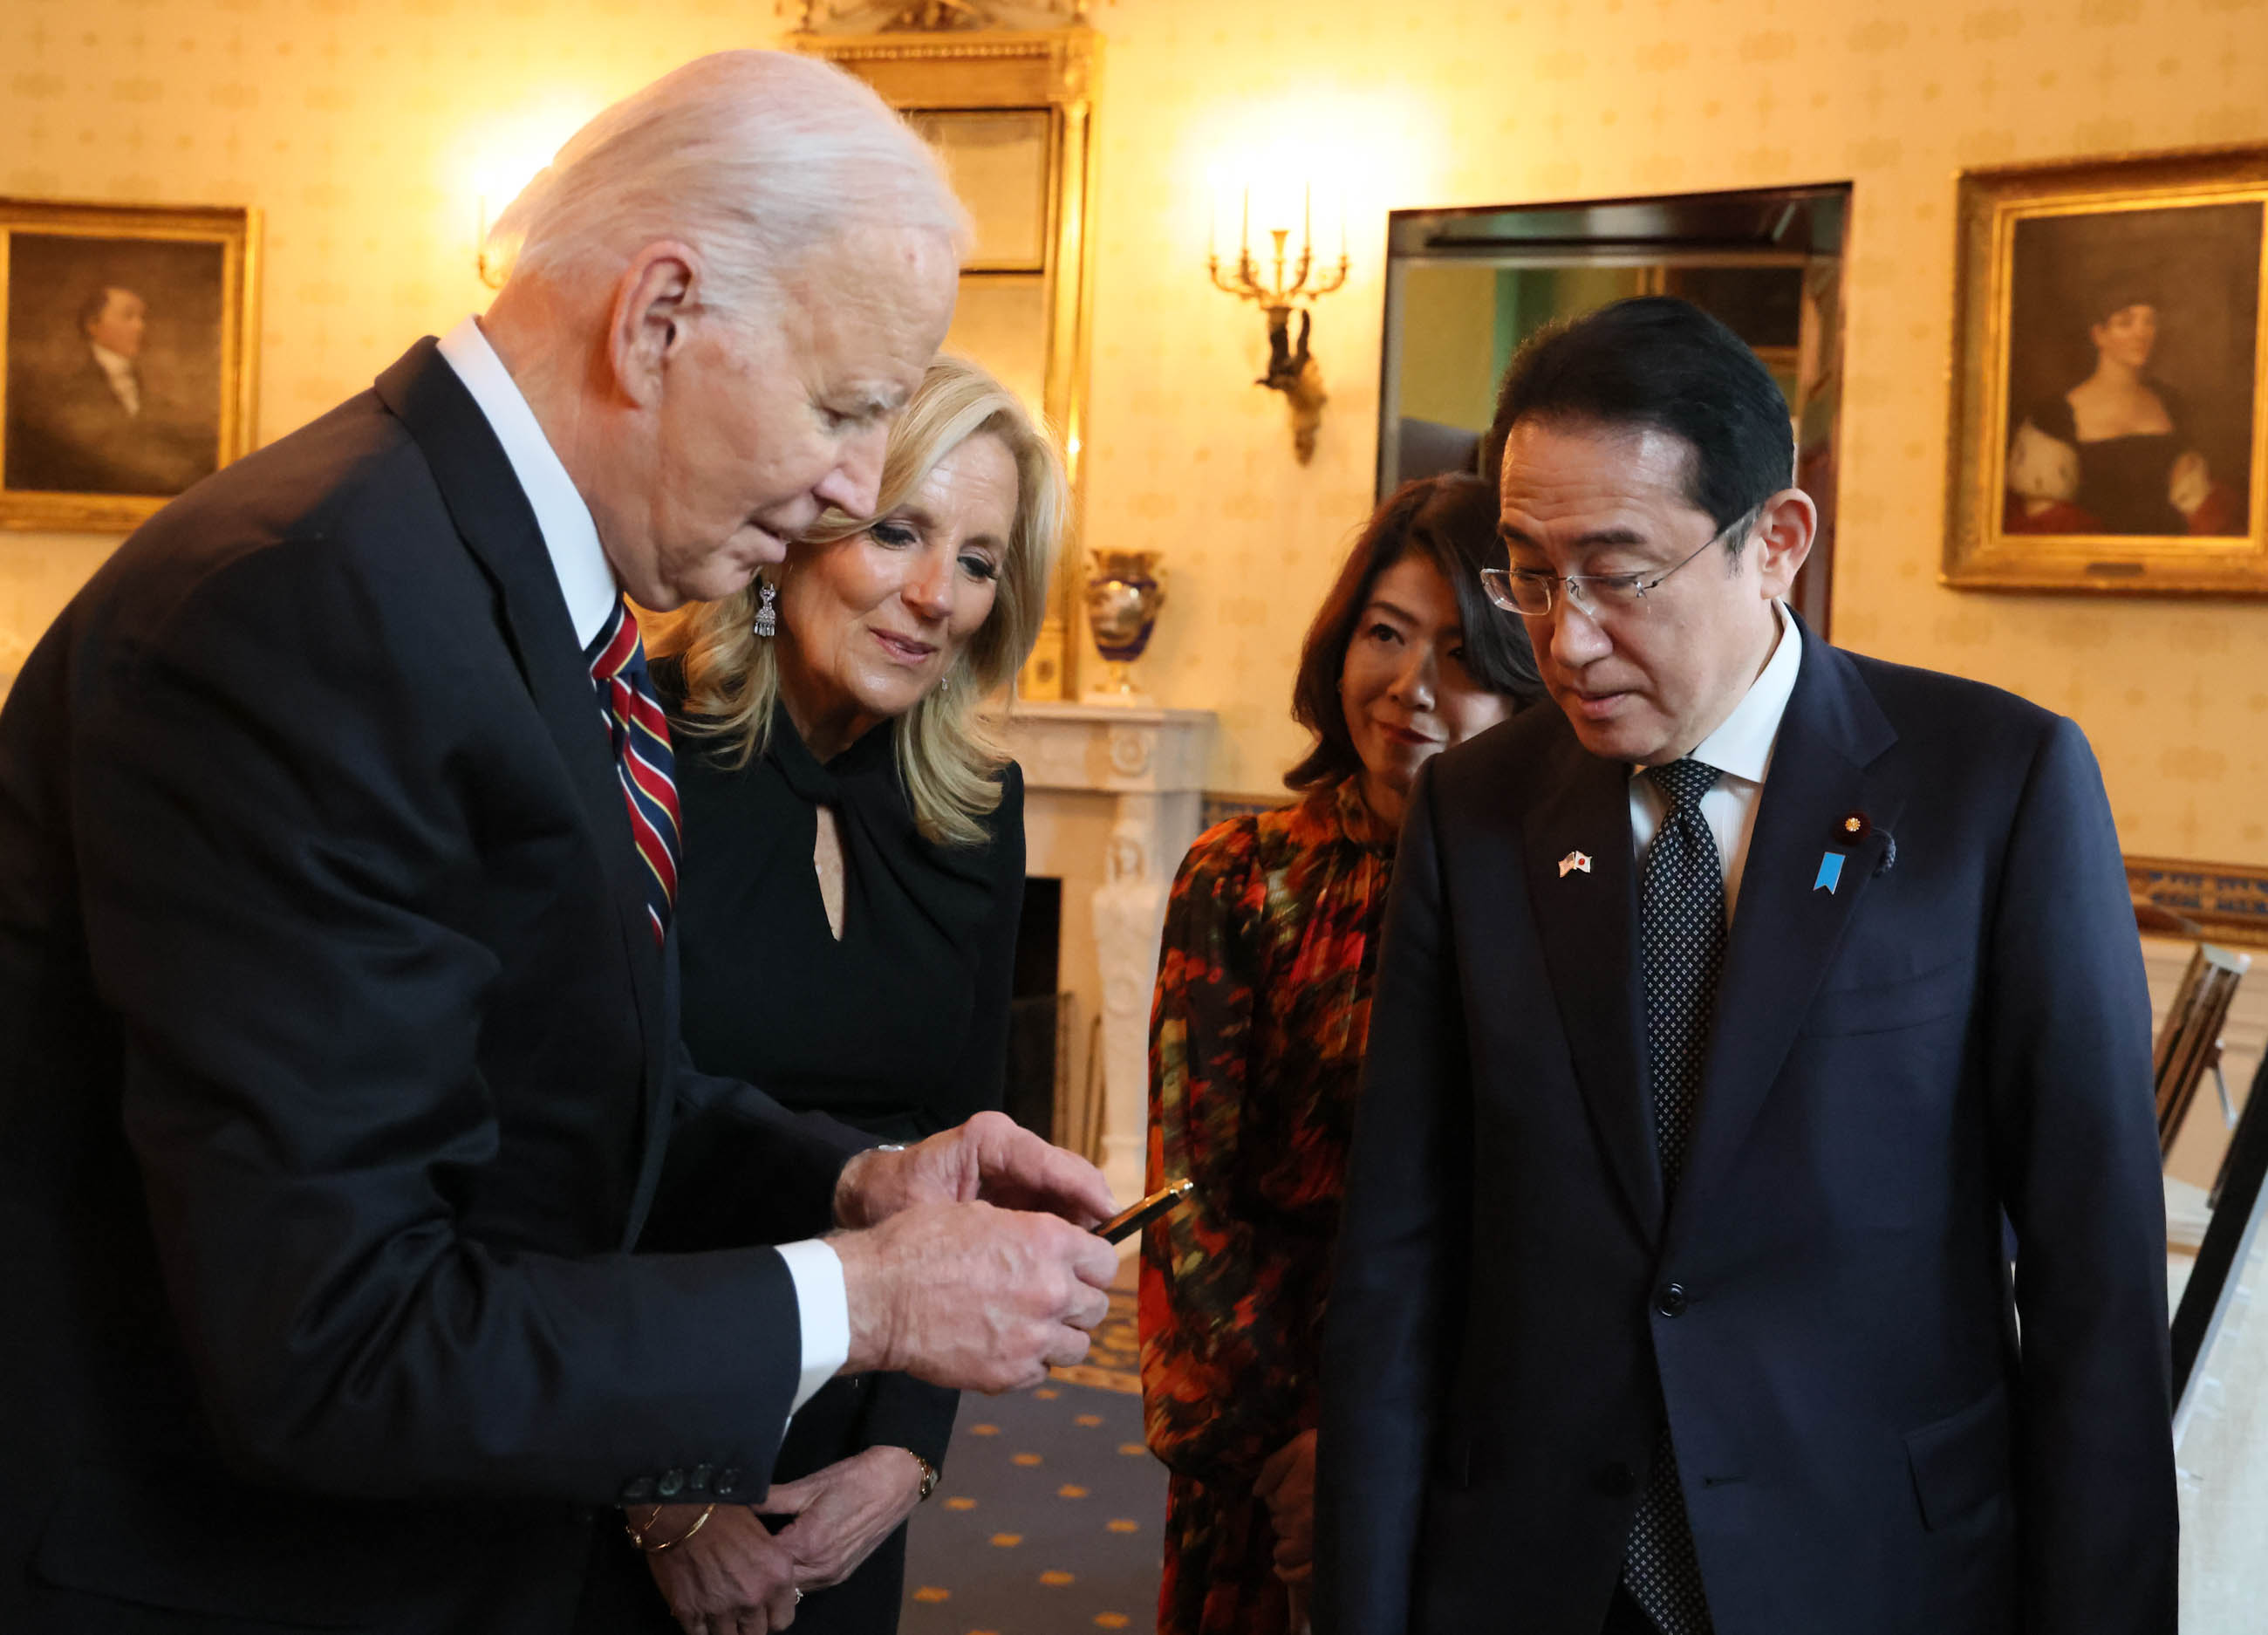 Event between Prime Minister Kishida, Mrs. Kishida, President Biden and Dr. Biden (3)